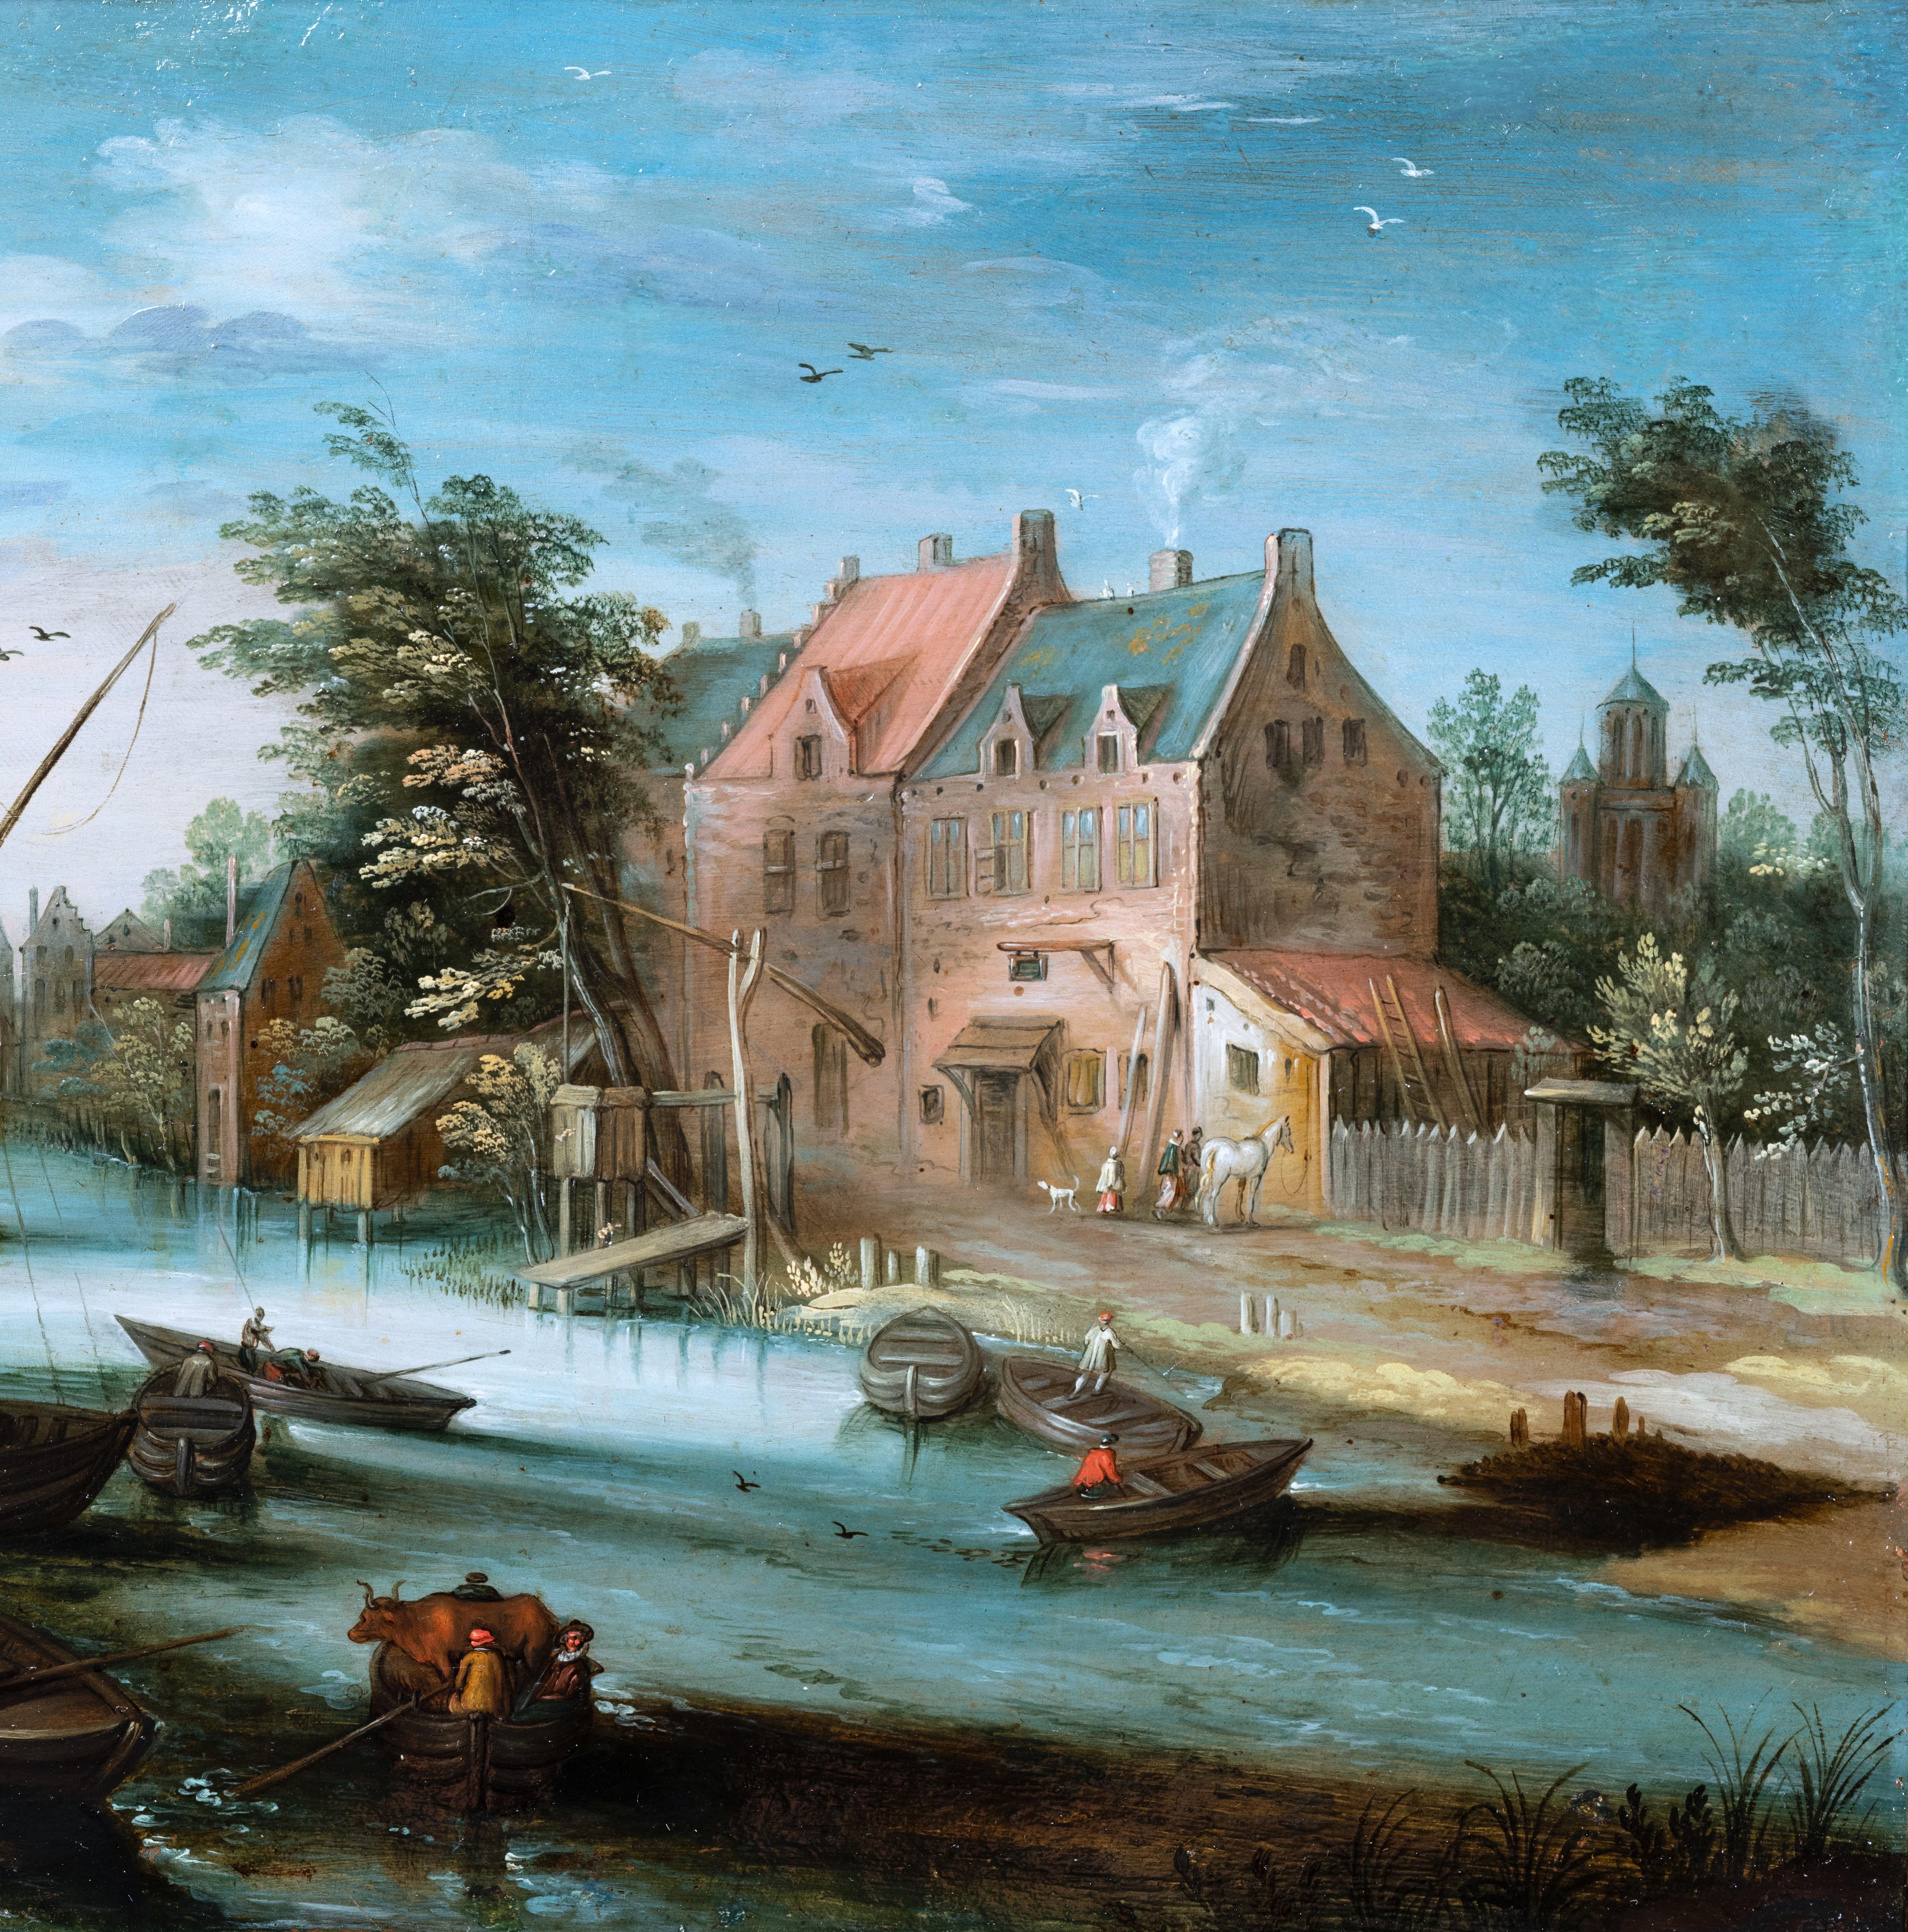 Flusslandschaft, Atelier von Jan Brueghel dem Jüngeren  Antwerpener Schule des 17. Jahrhunderts (Alte Meister), Painting, von Studio of Jan Brueghel the Younger